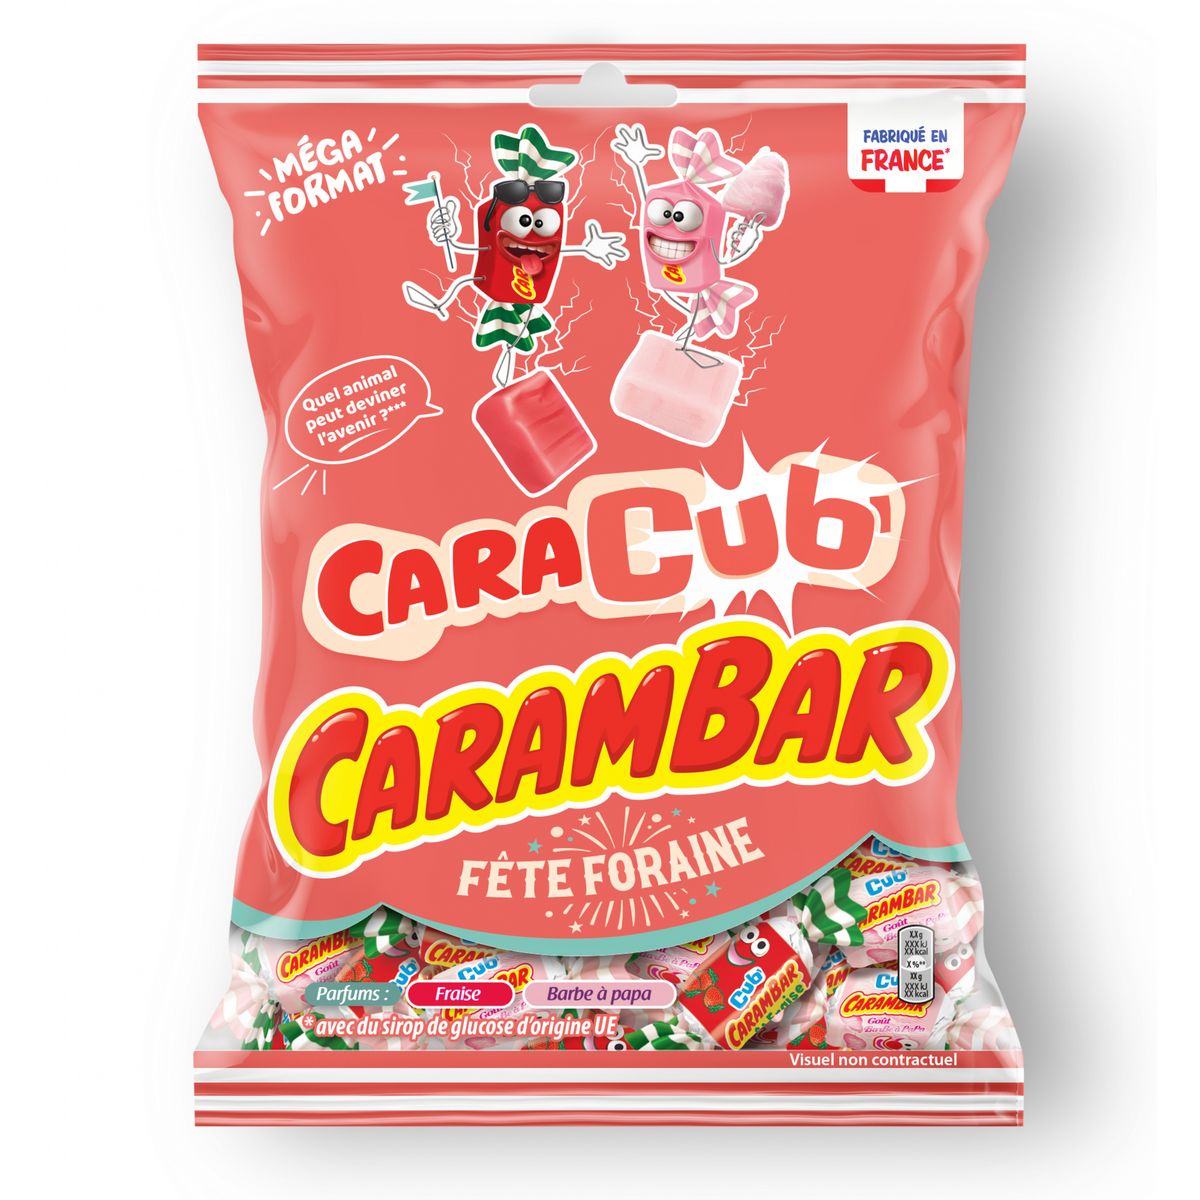 CARAMBAR Caracub fête foraine parfum fraise et barbe à papa 400g